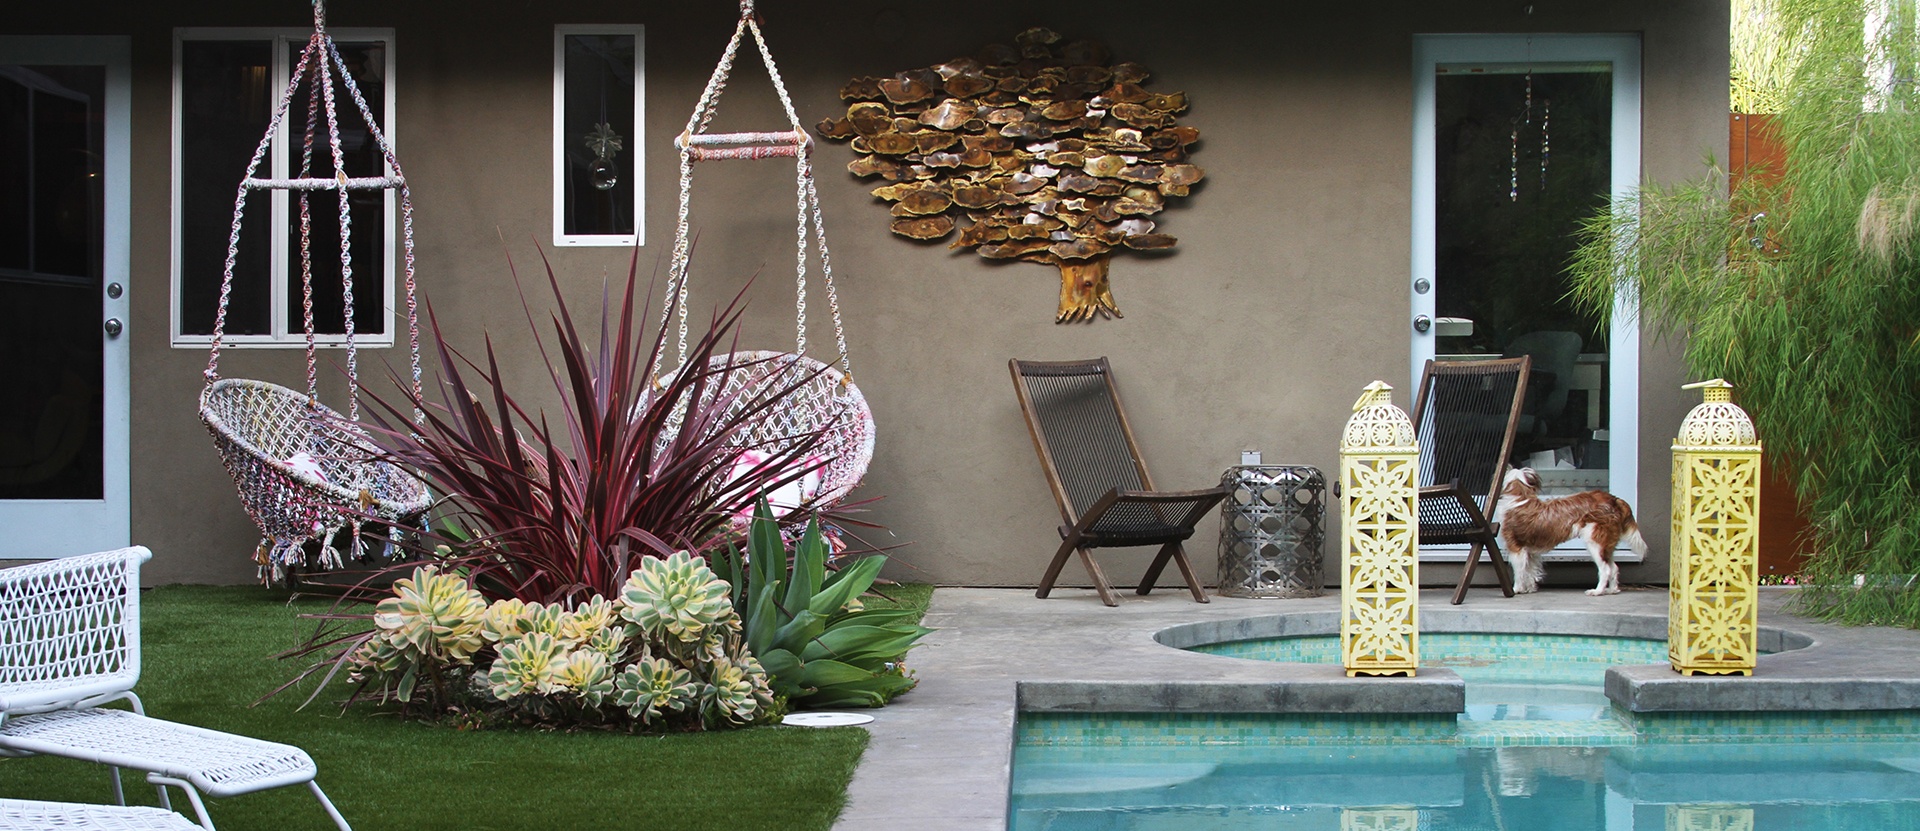 007-design-vidal-silver-lake-exterior-swimming-pool-hot-tub-los-angeles-backyards-artificial-turf-swinging-hanging-chairs-outdoor-retreat-summer-fun